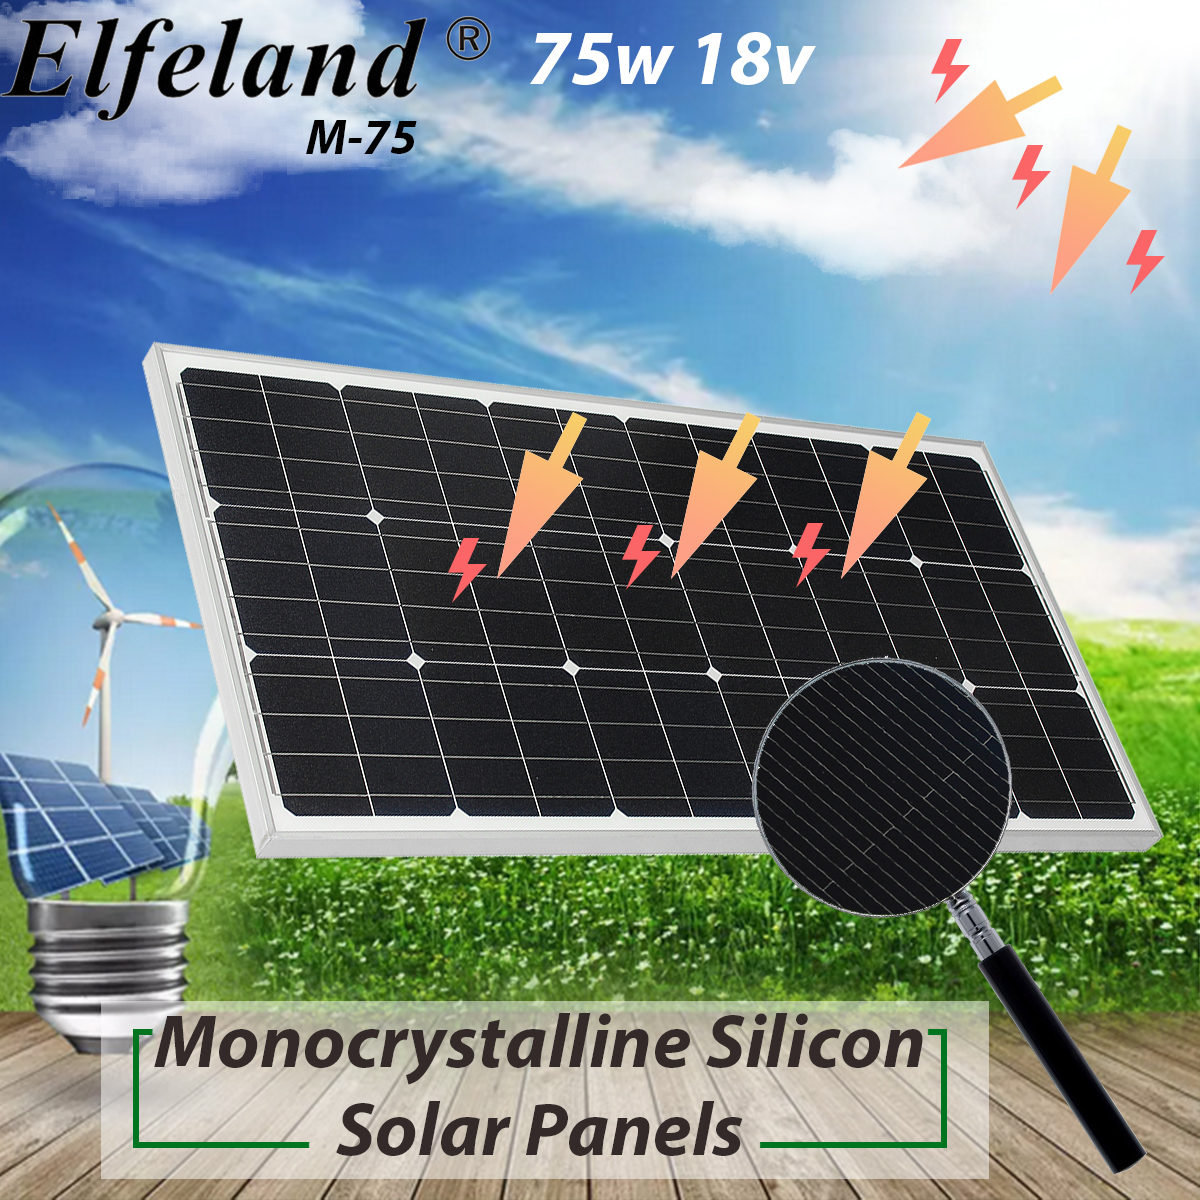 Elfeland-M-75-75W-18V-Monocrystalline-Silicon-Solar-Panel-Battery-Charger-For-Boat-Caravan-Motorhome-1289909-1